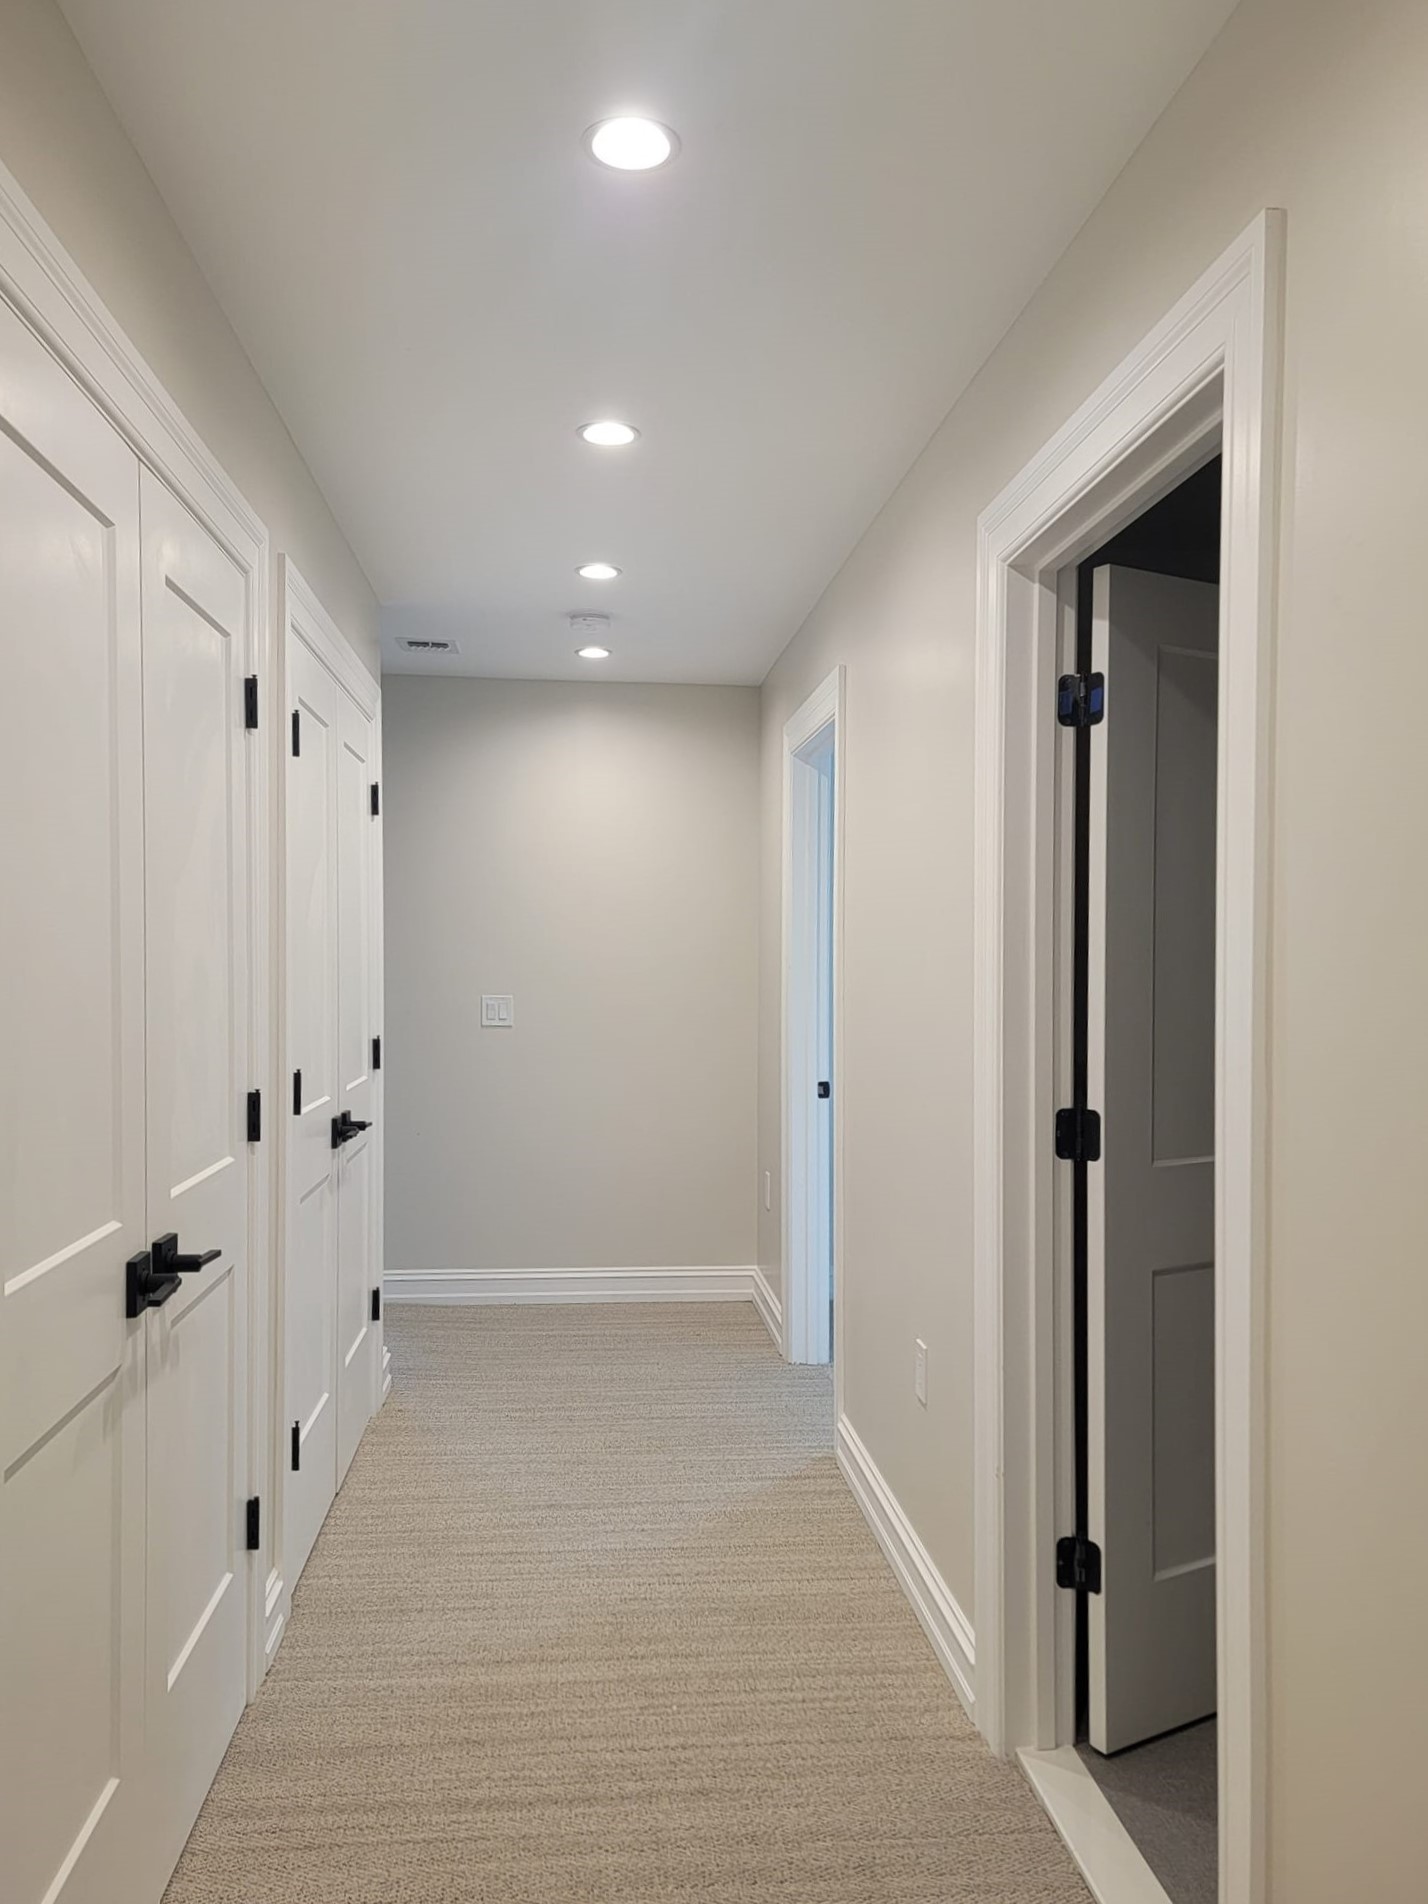 Hallway image